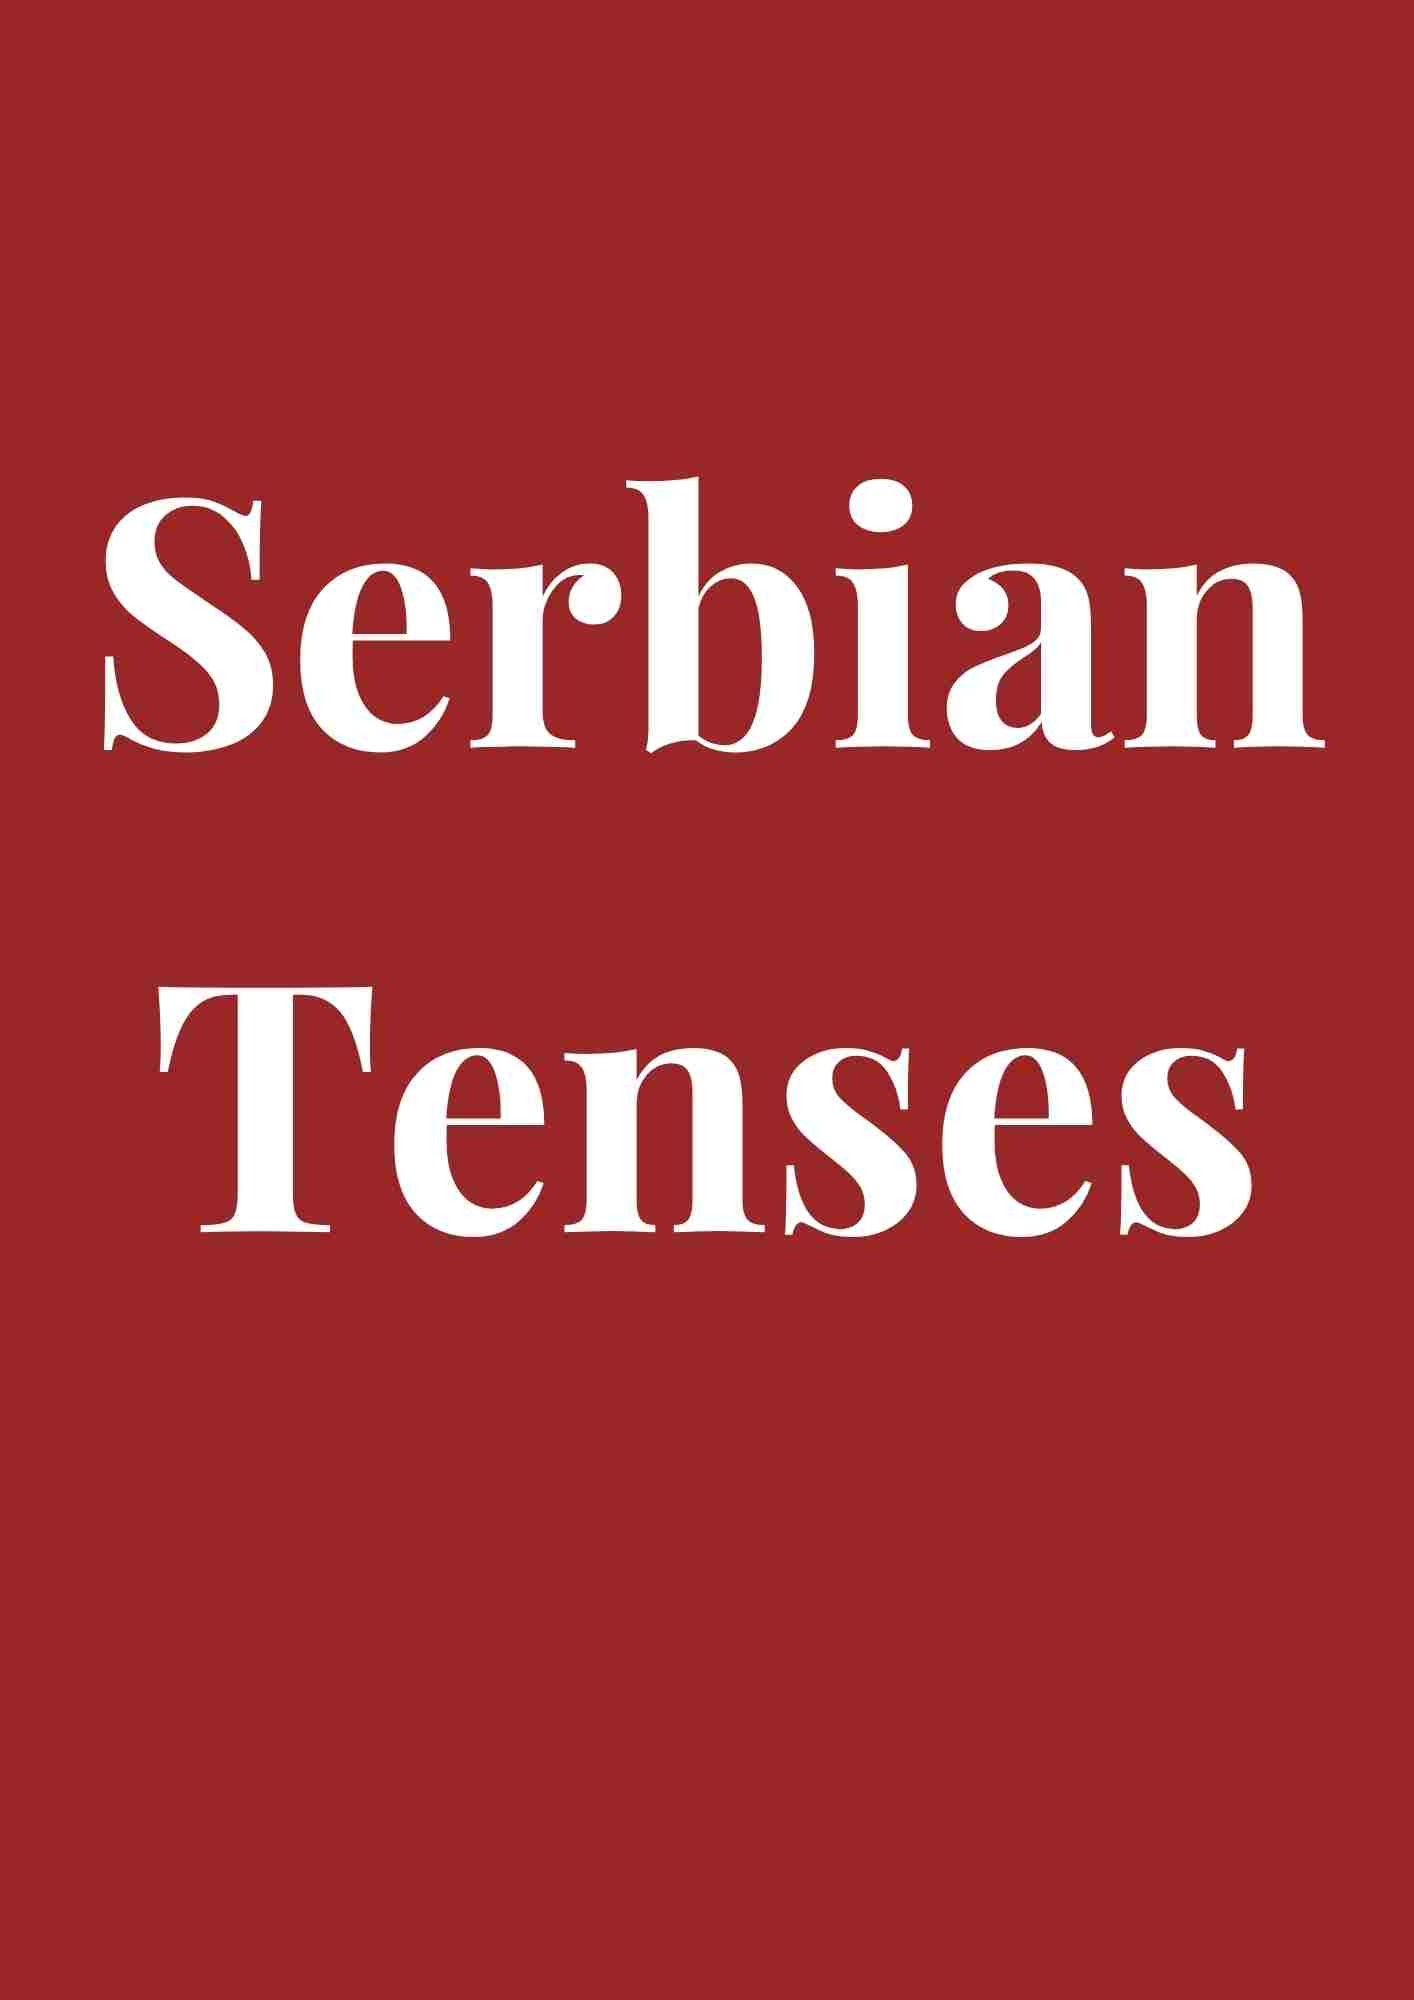 Serbian Tenses Cheat Sheet PDF